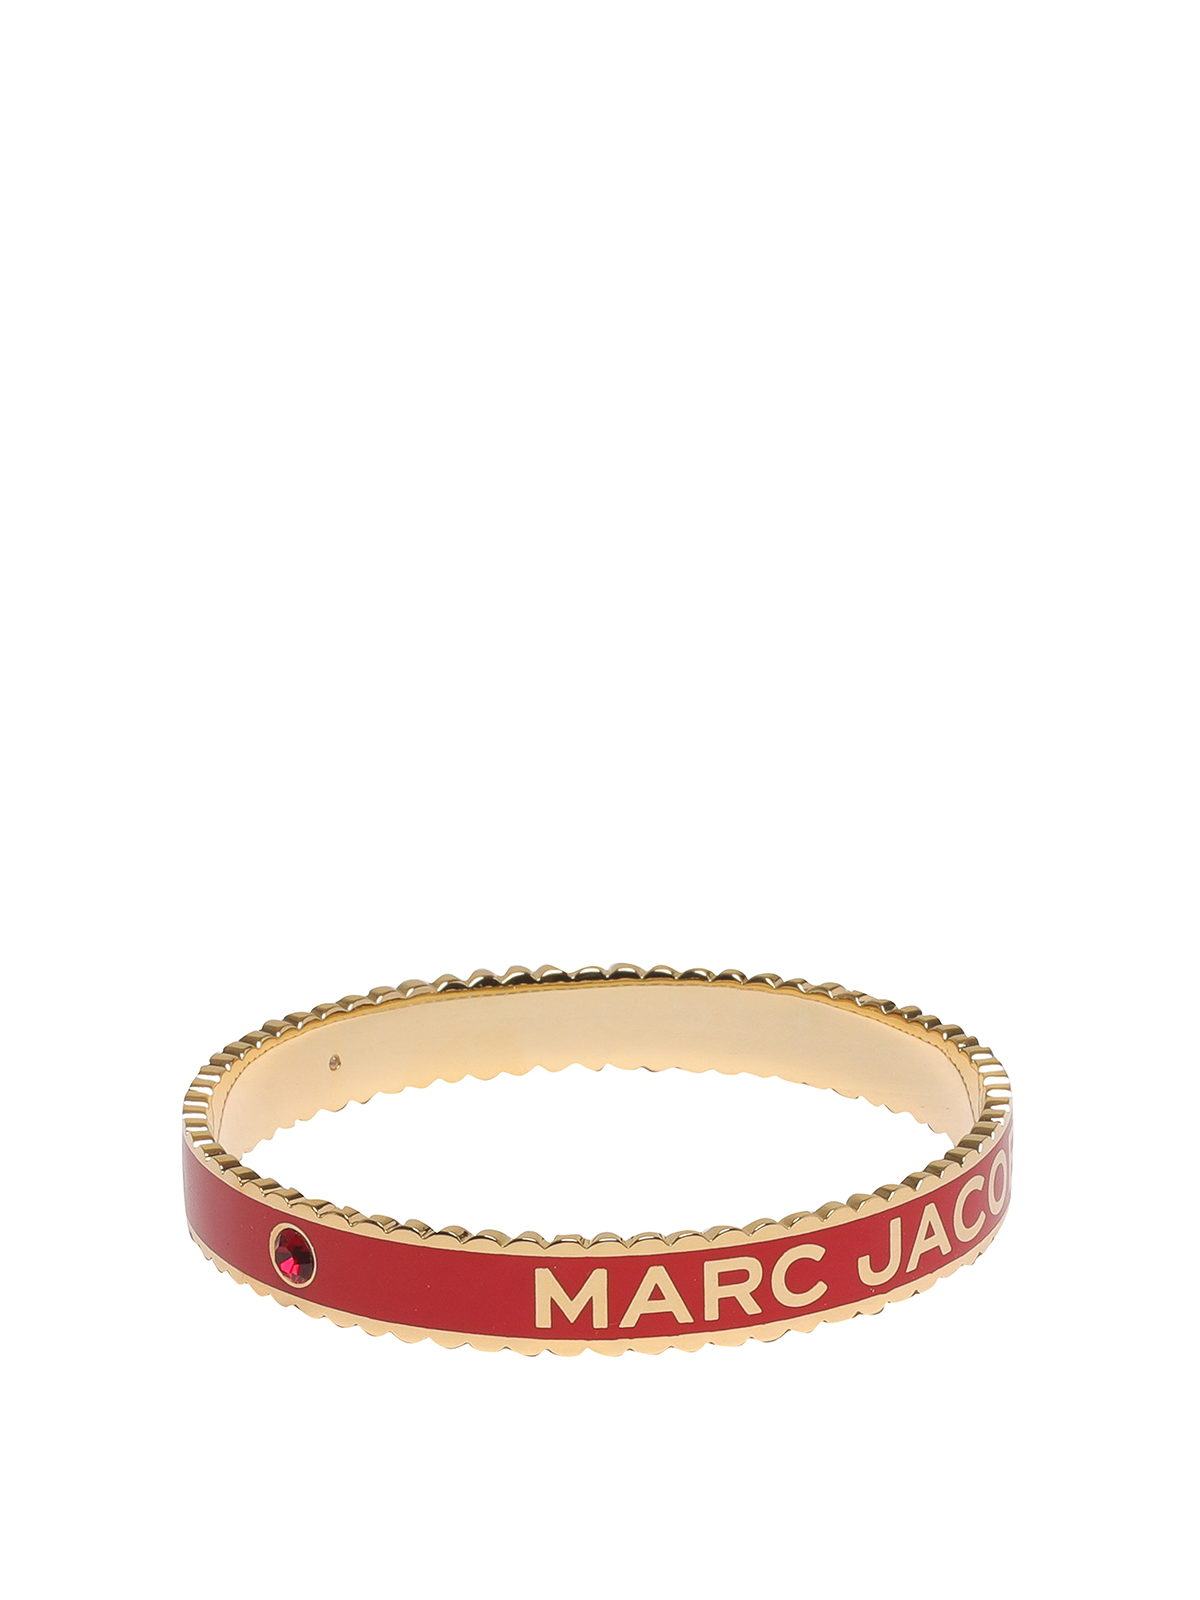 MARC JACOBS Logo pendant hinge bracelet M0008542 | eBay